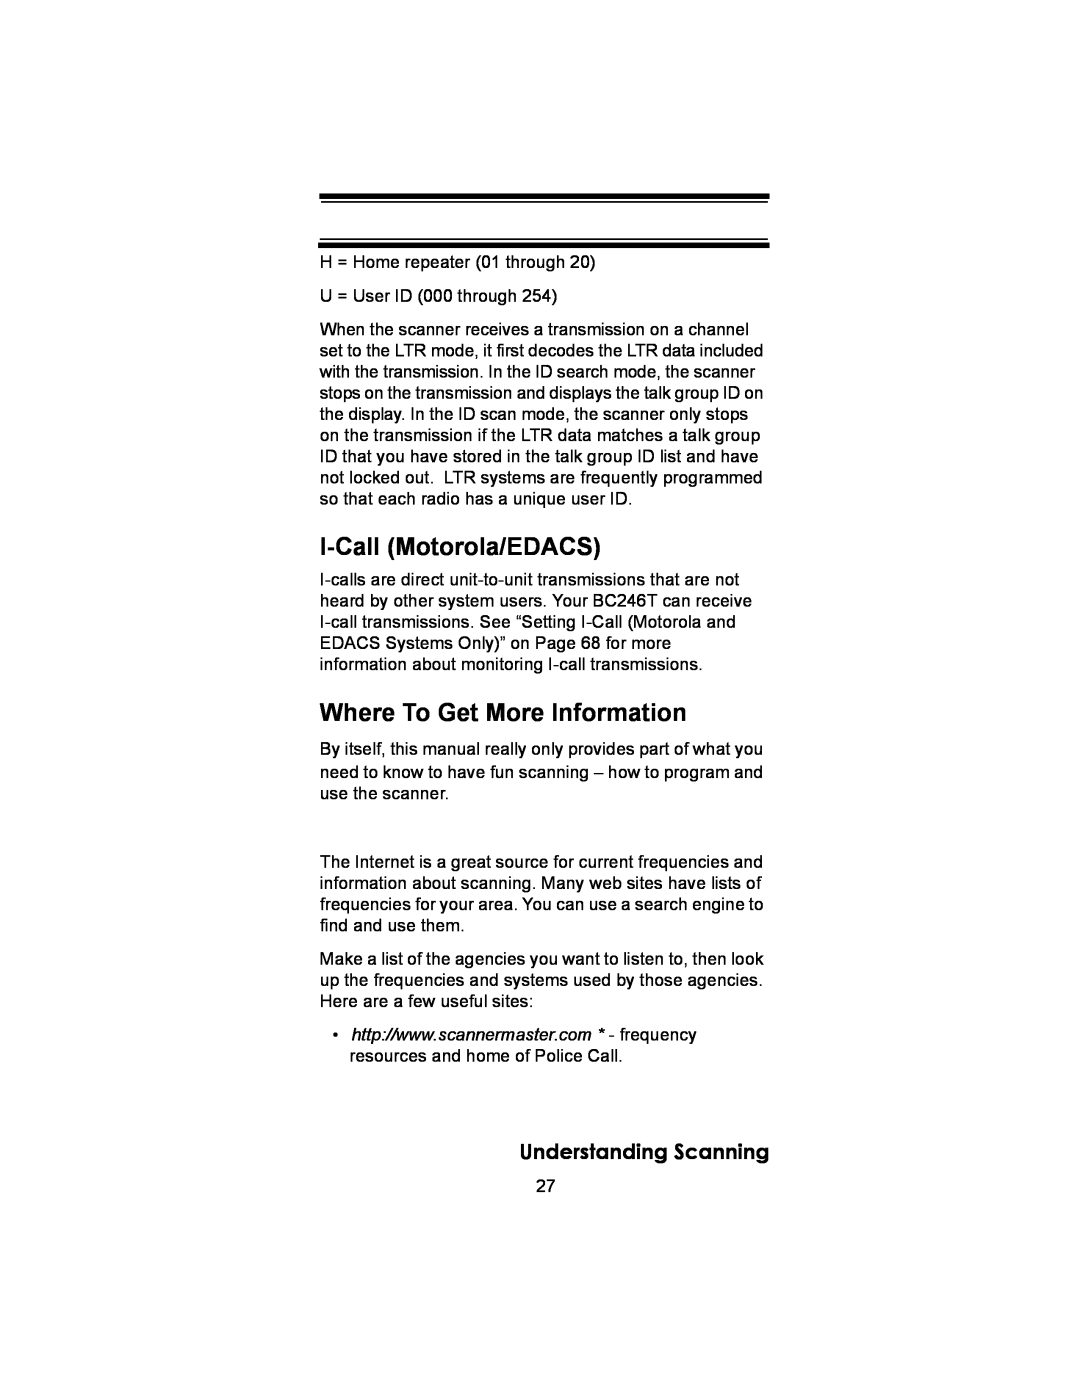 Uniden BC246T owner manual I-CallMotorola/EDACS, Where To Get More Information, Understanding Scanning 